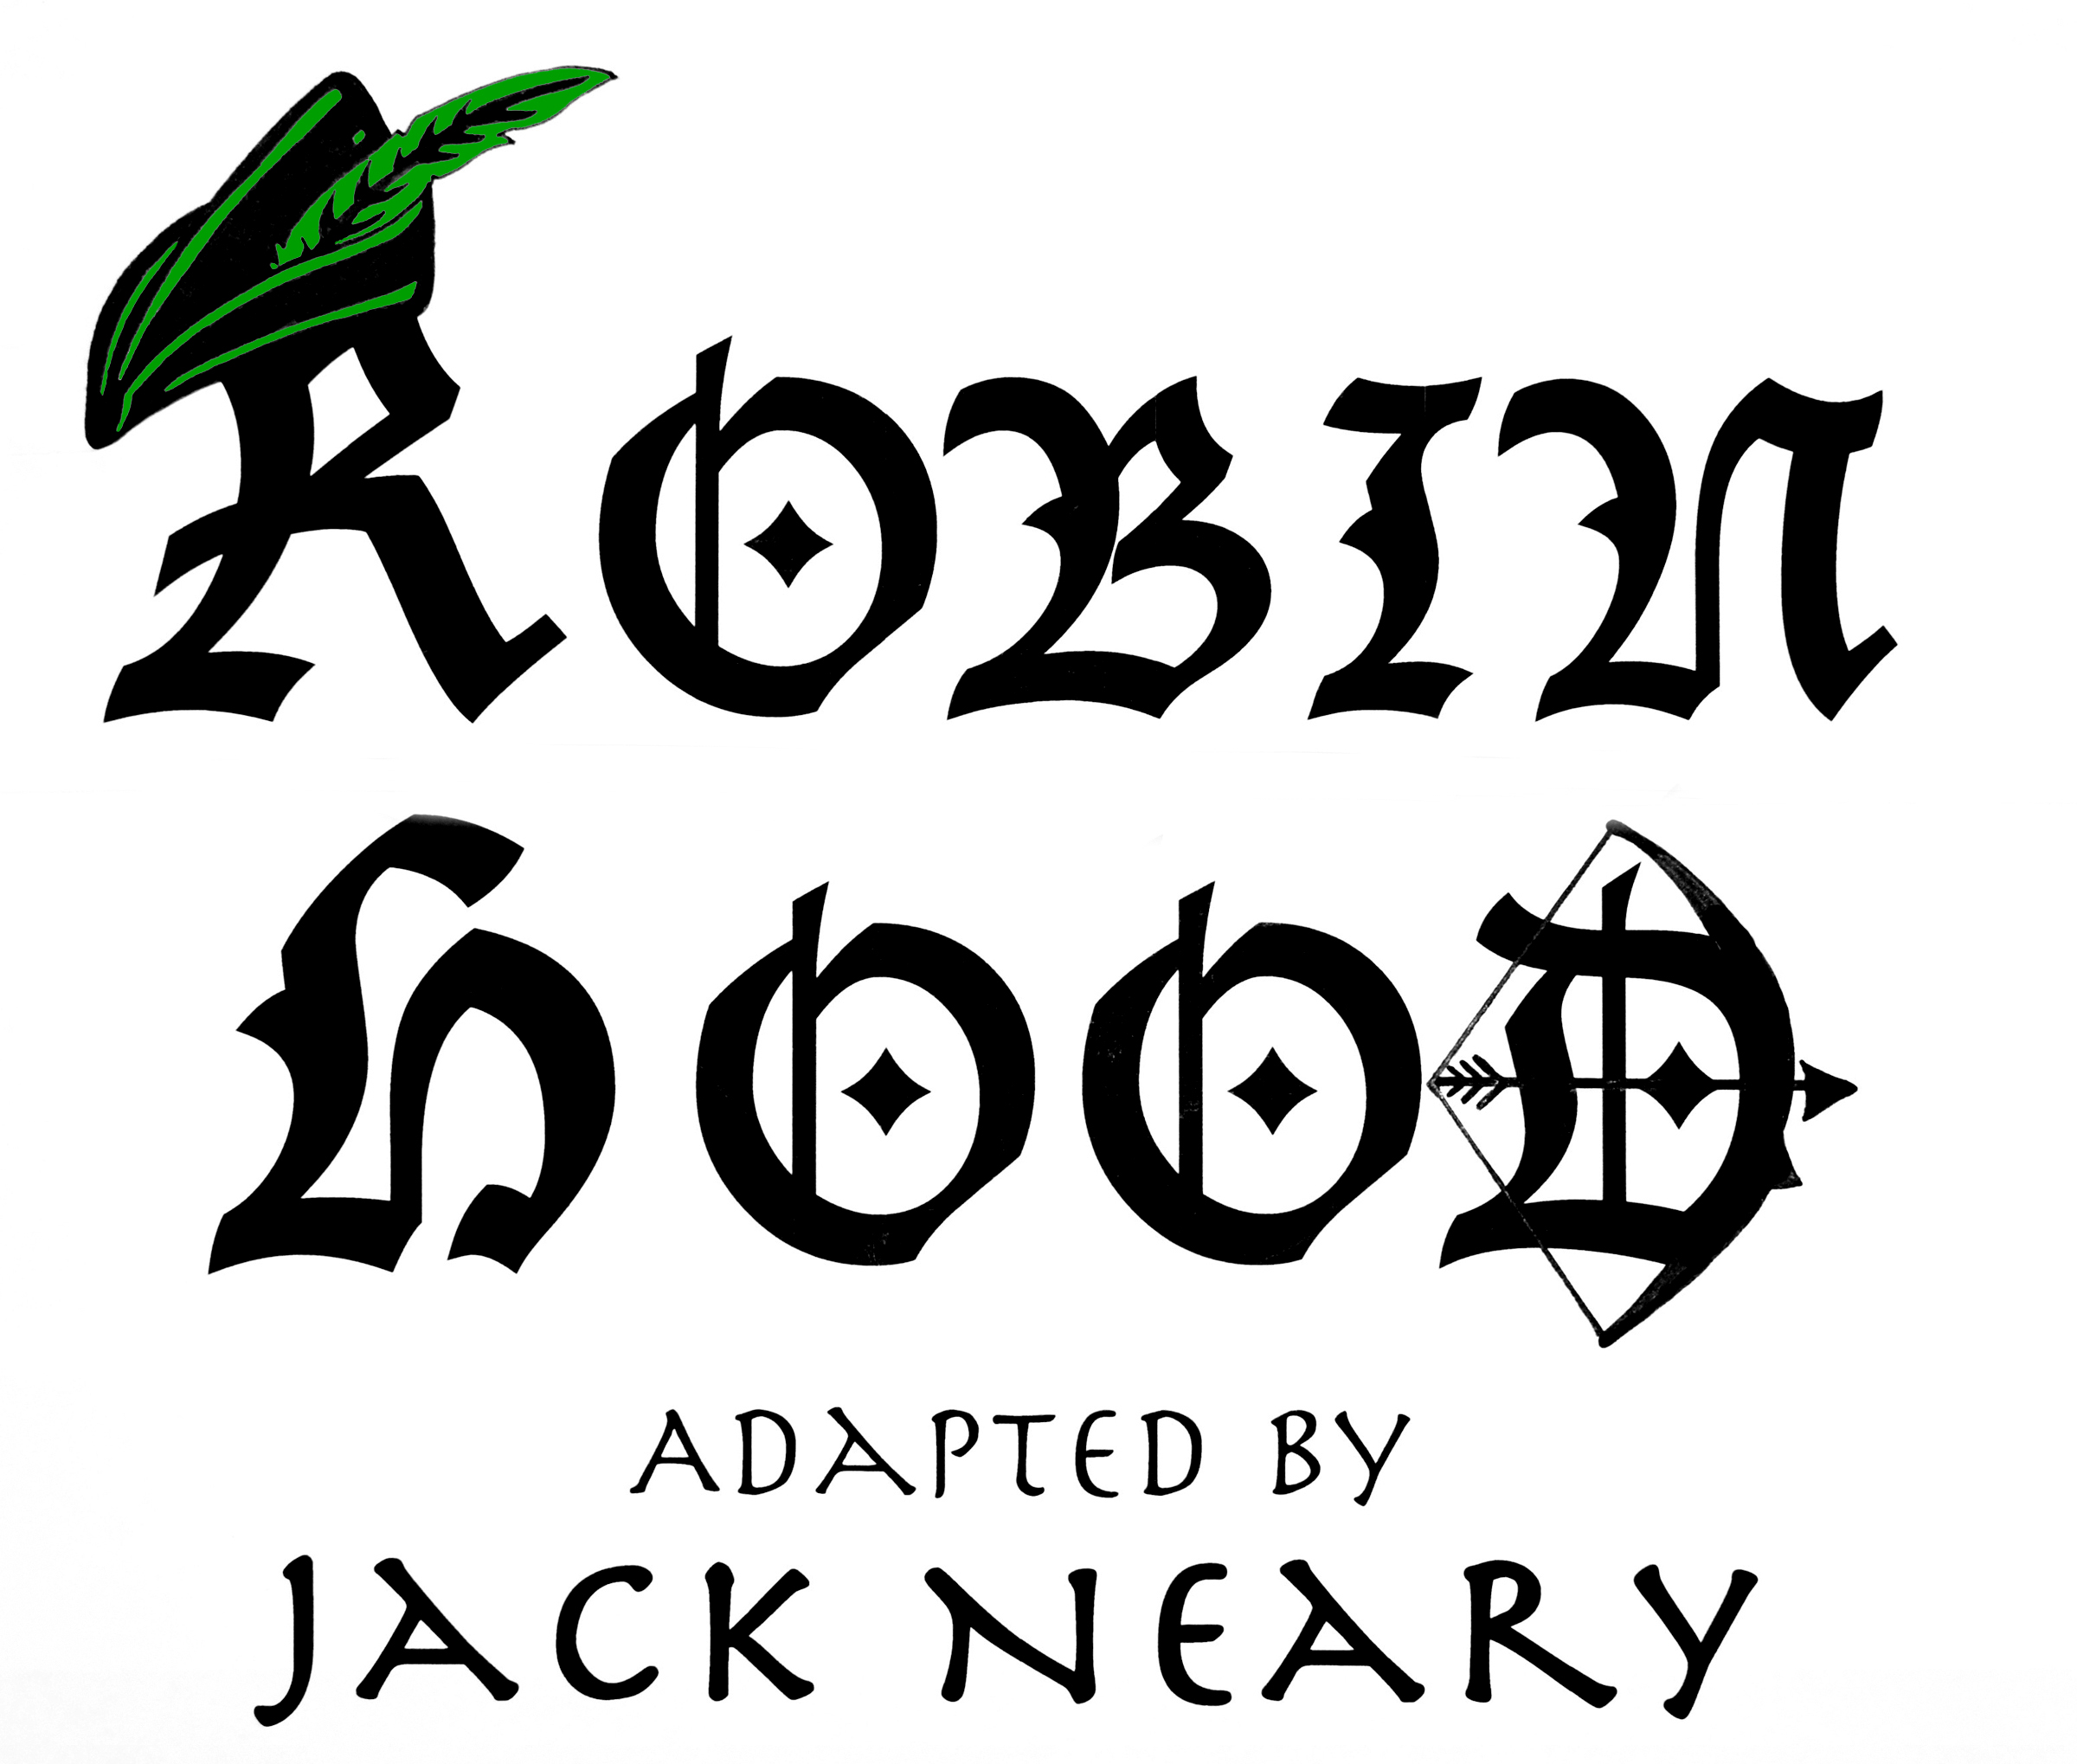 Robin Hood with green hat wording